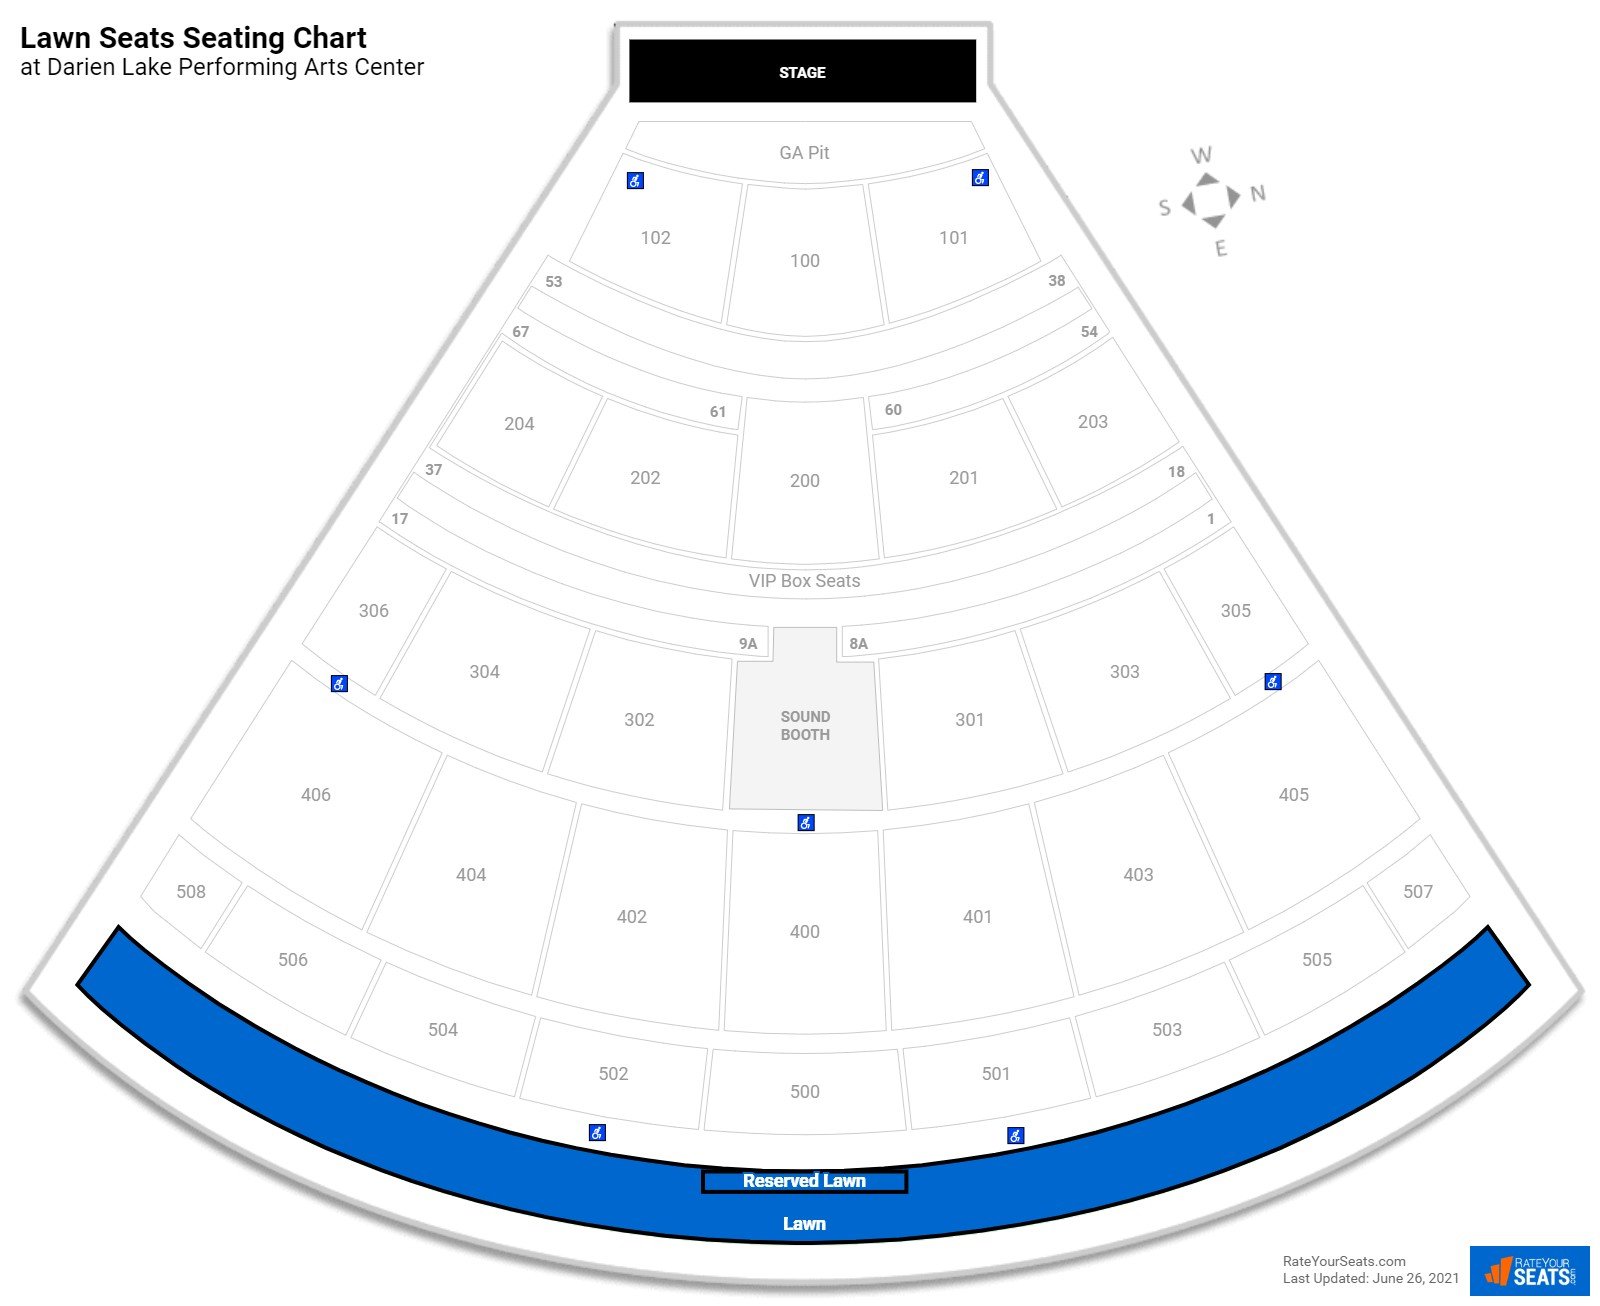 Concert Lawn Seats Seating Chart at Darien Lake Amphitheater